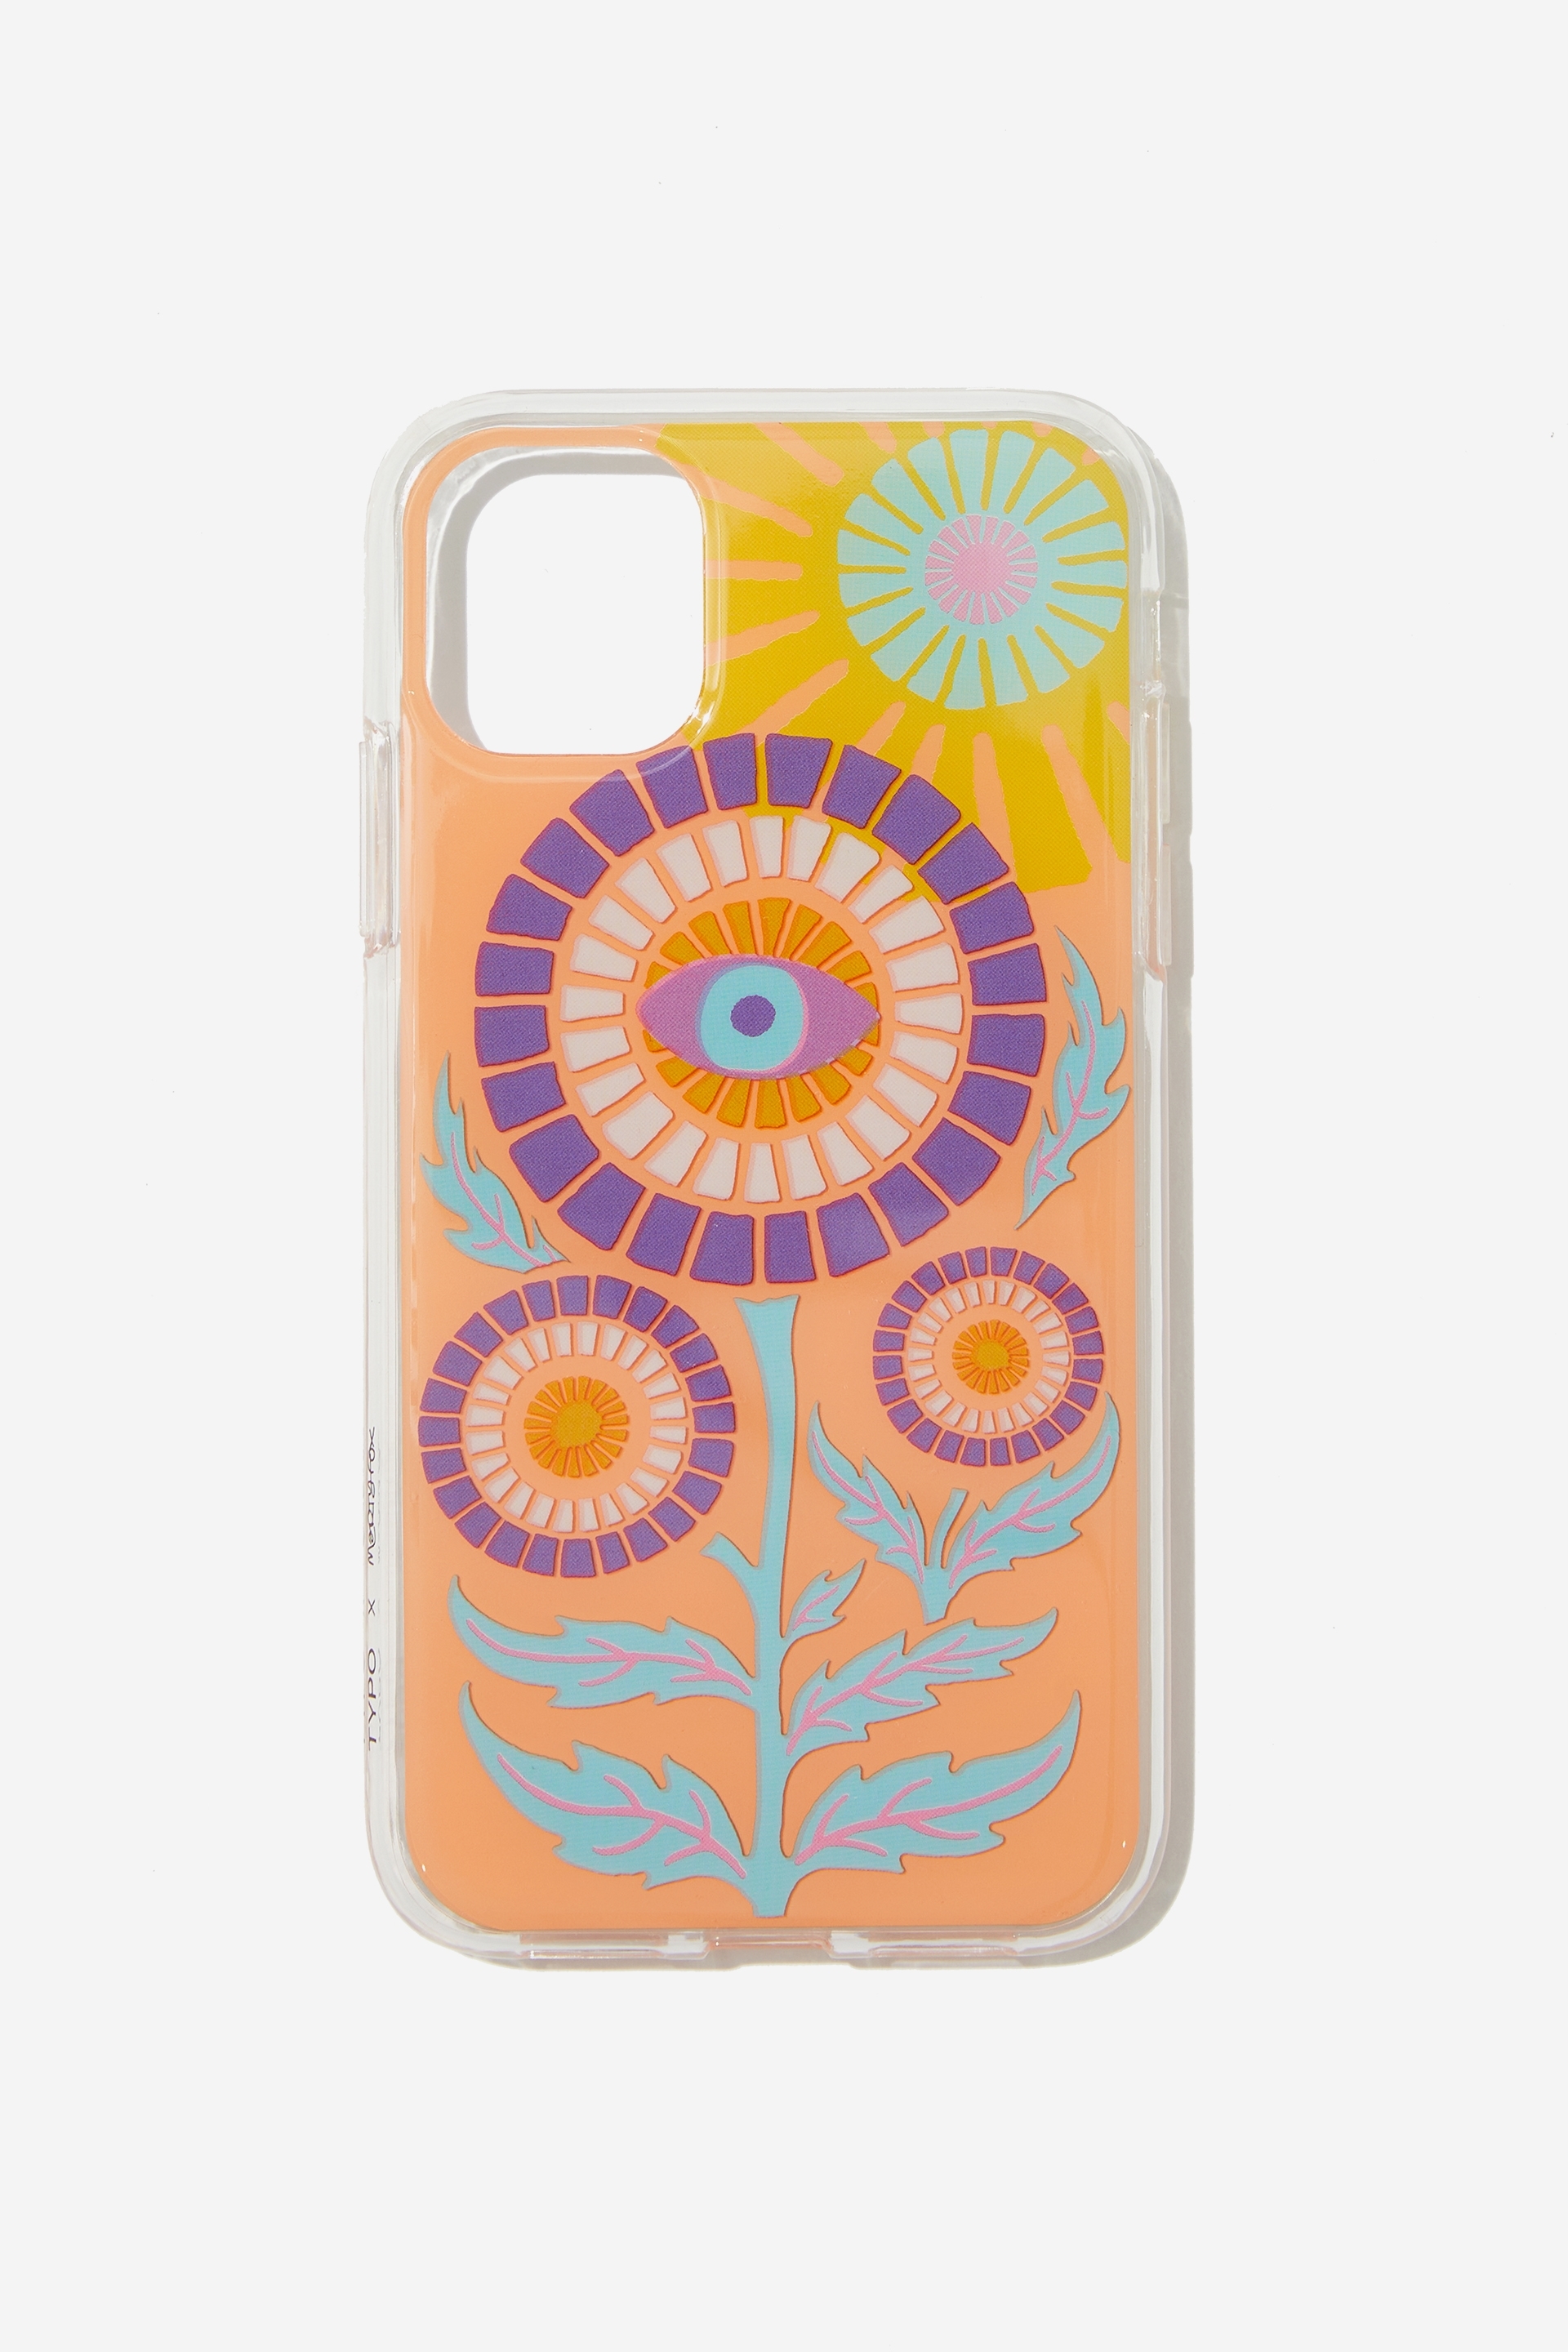 Typo - Graphic Phone Case Iphone 11 - As txm sunflower